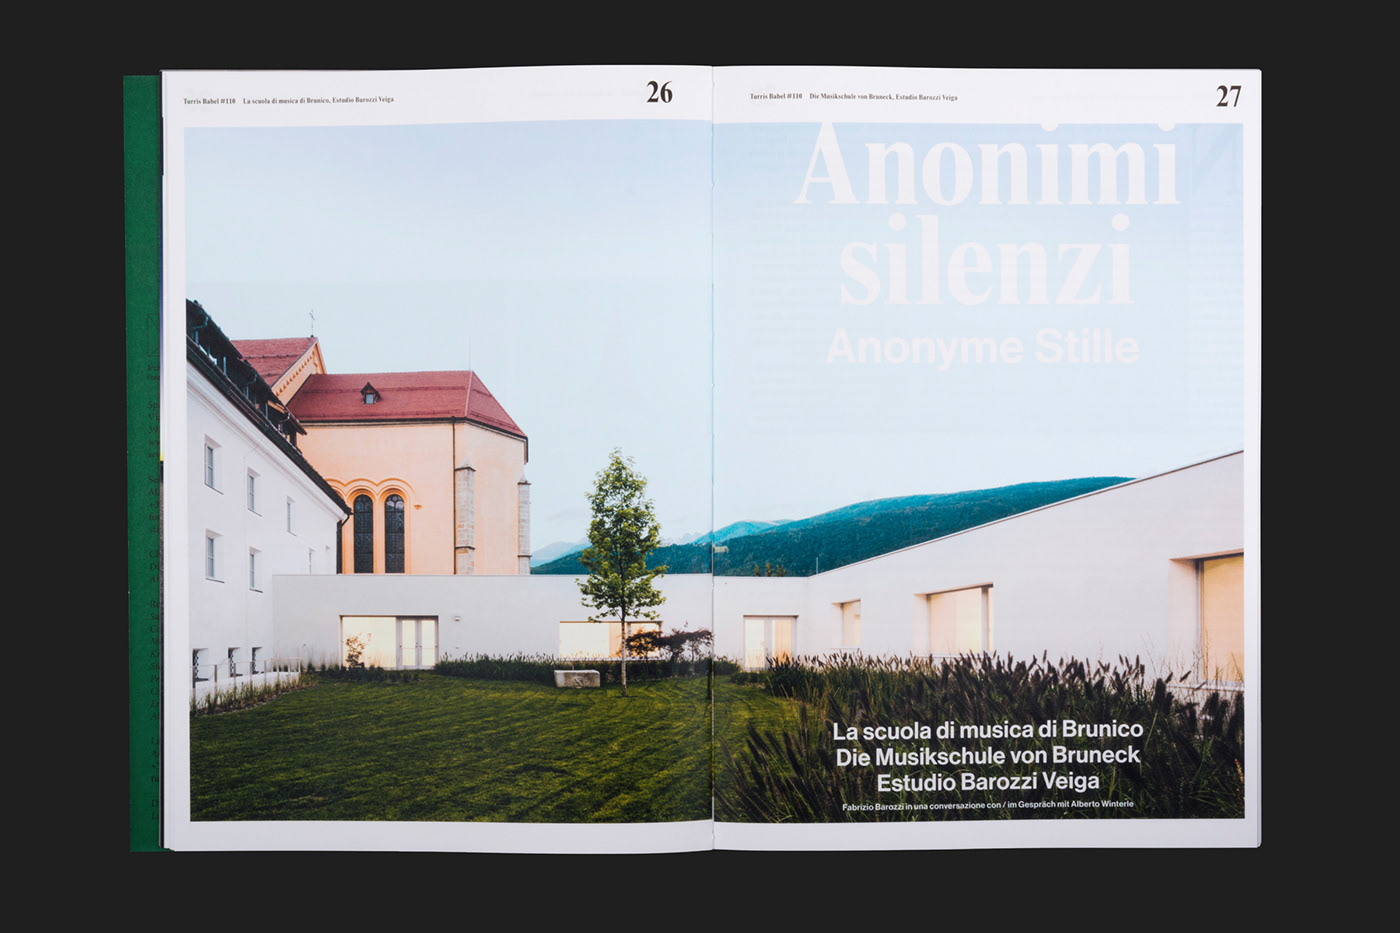 studio mut turris babel architecture magazine south tyrol music